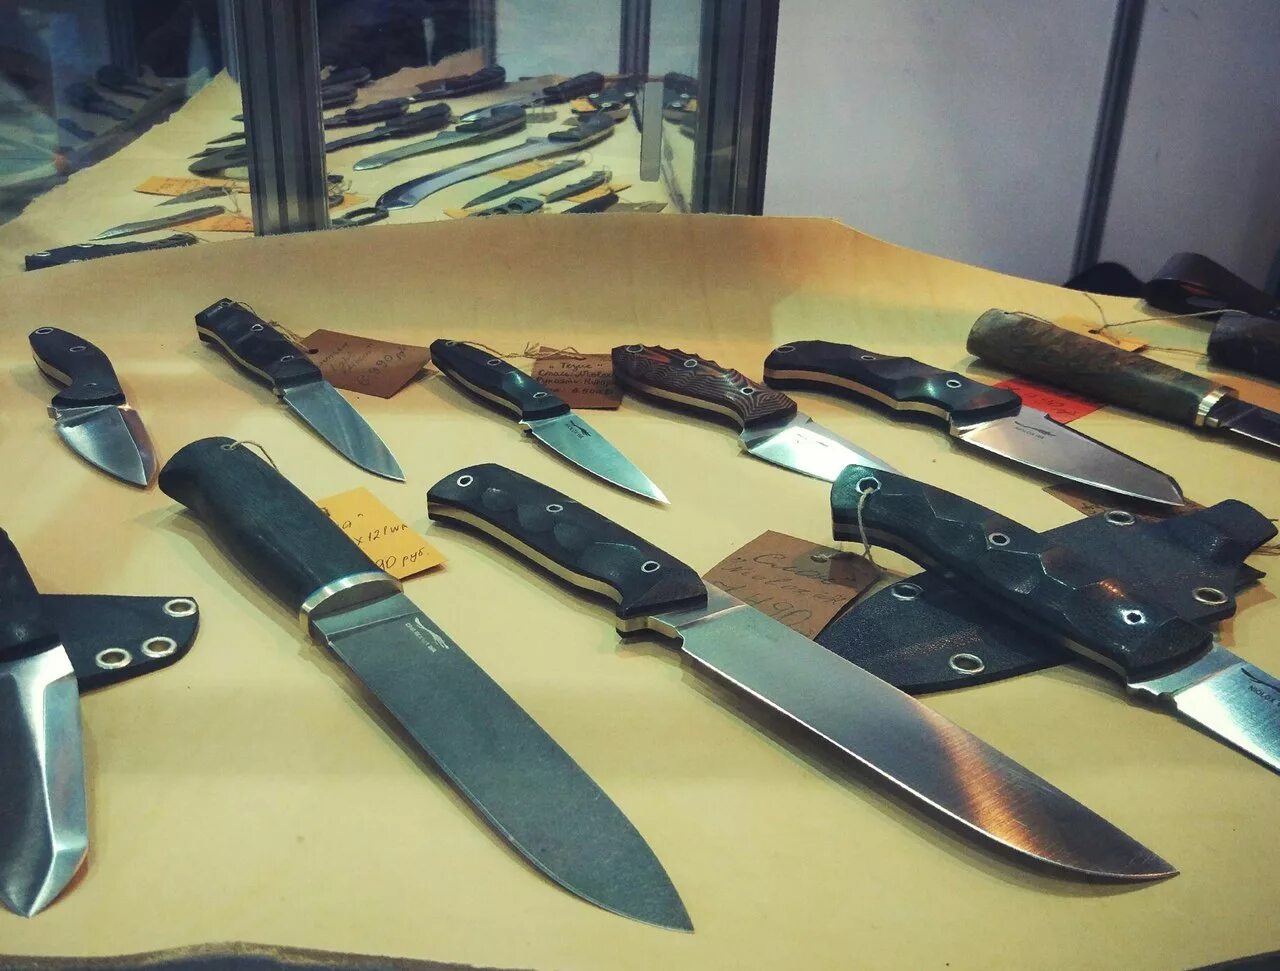 Ножевая выставка. Интересные ножи. Выставка ножей. Ножевые выставки. Выставка клинок.